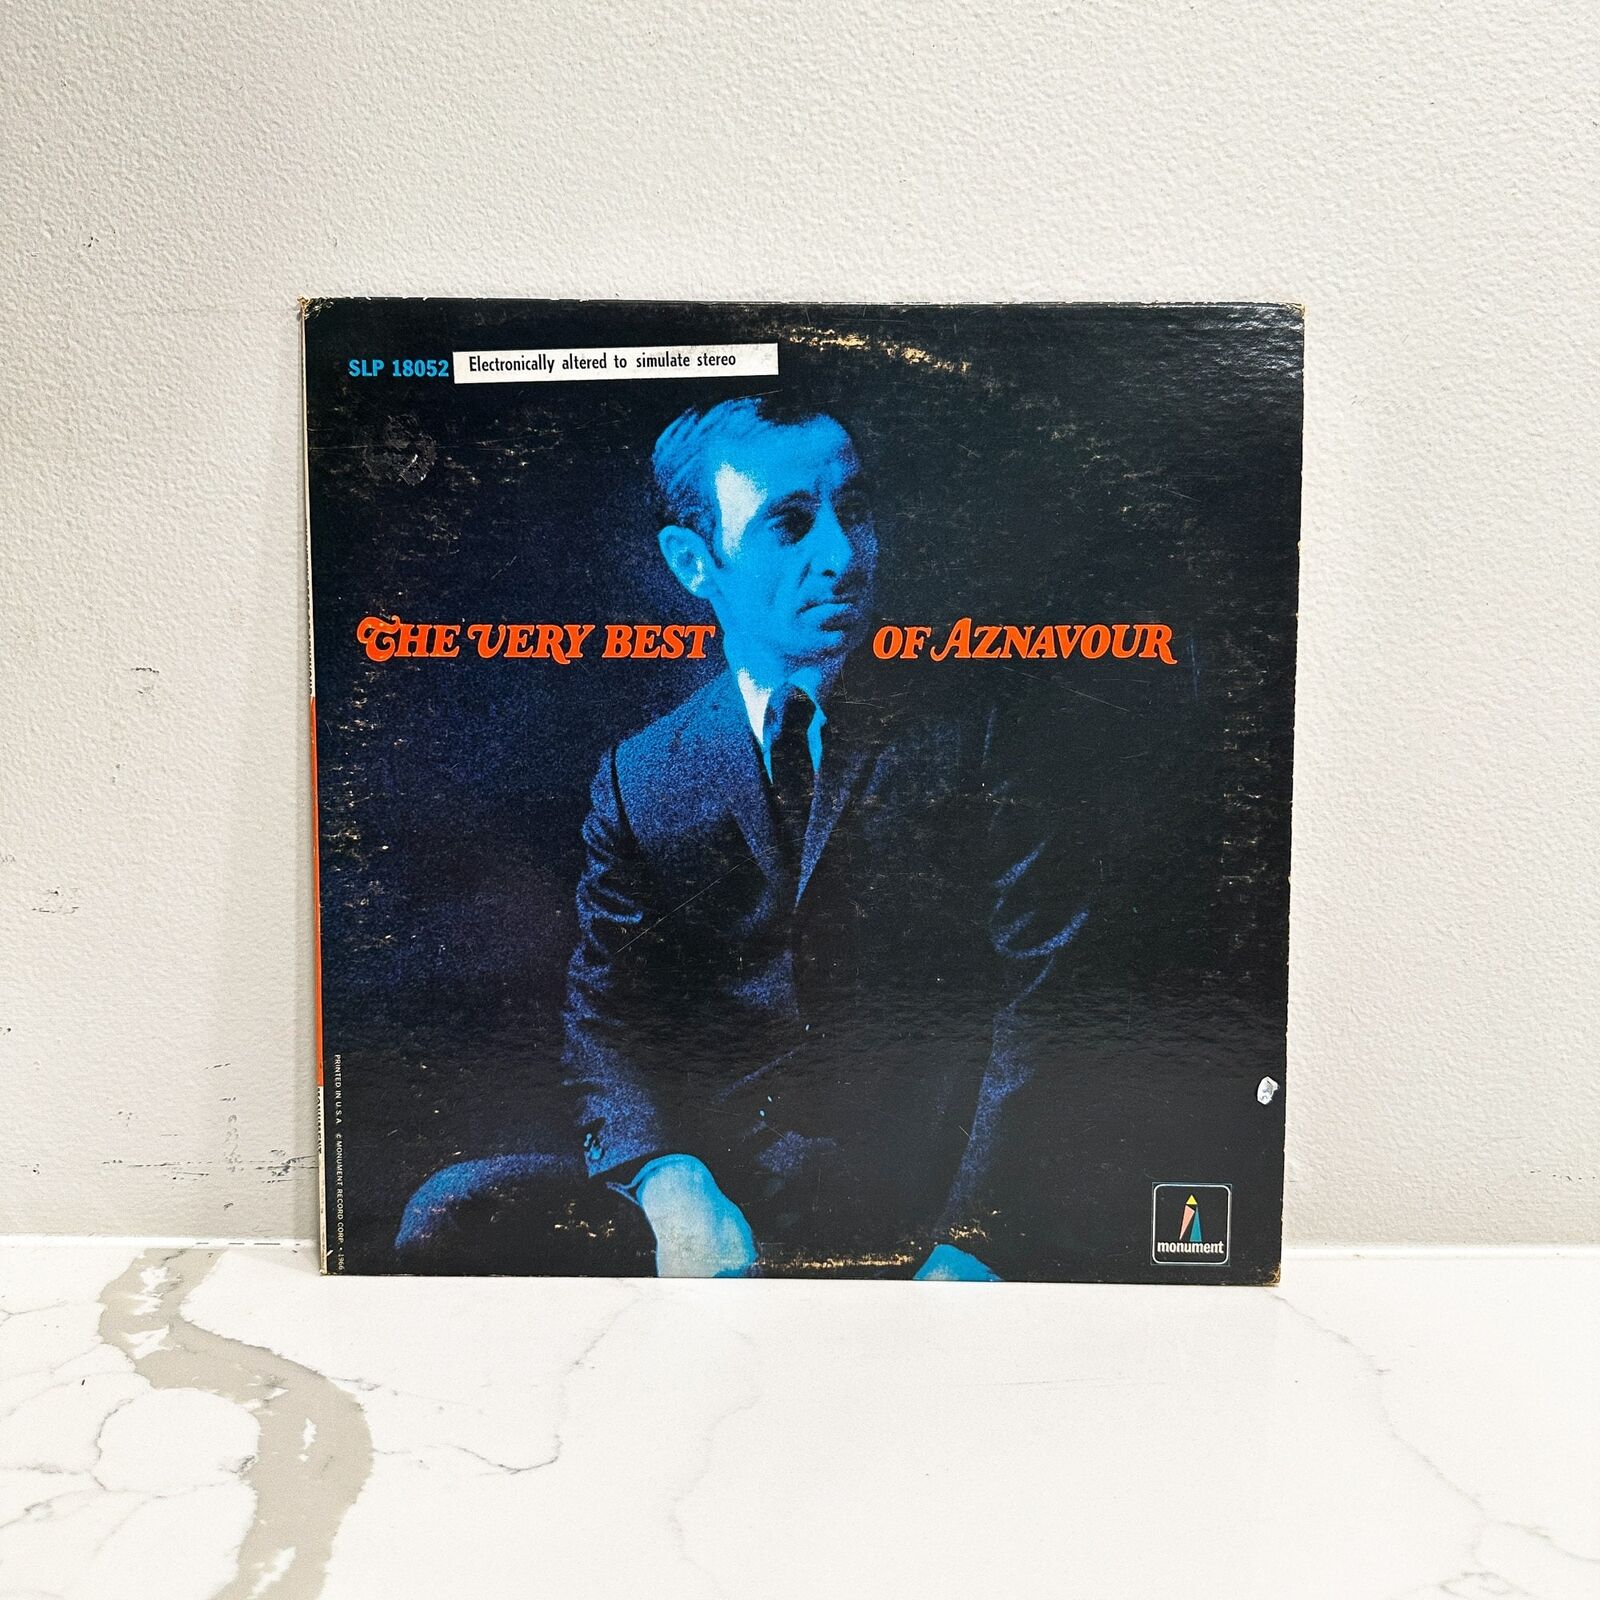 Charles Aznavour – The Very Best Of Aznavour - Vinyl LP Record - 1966